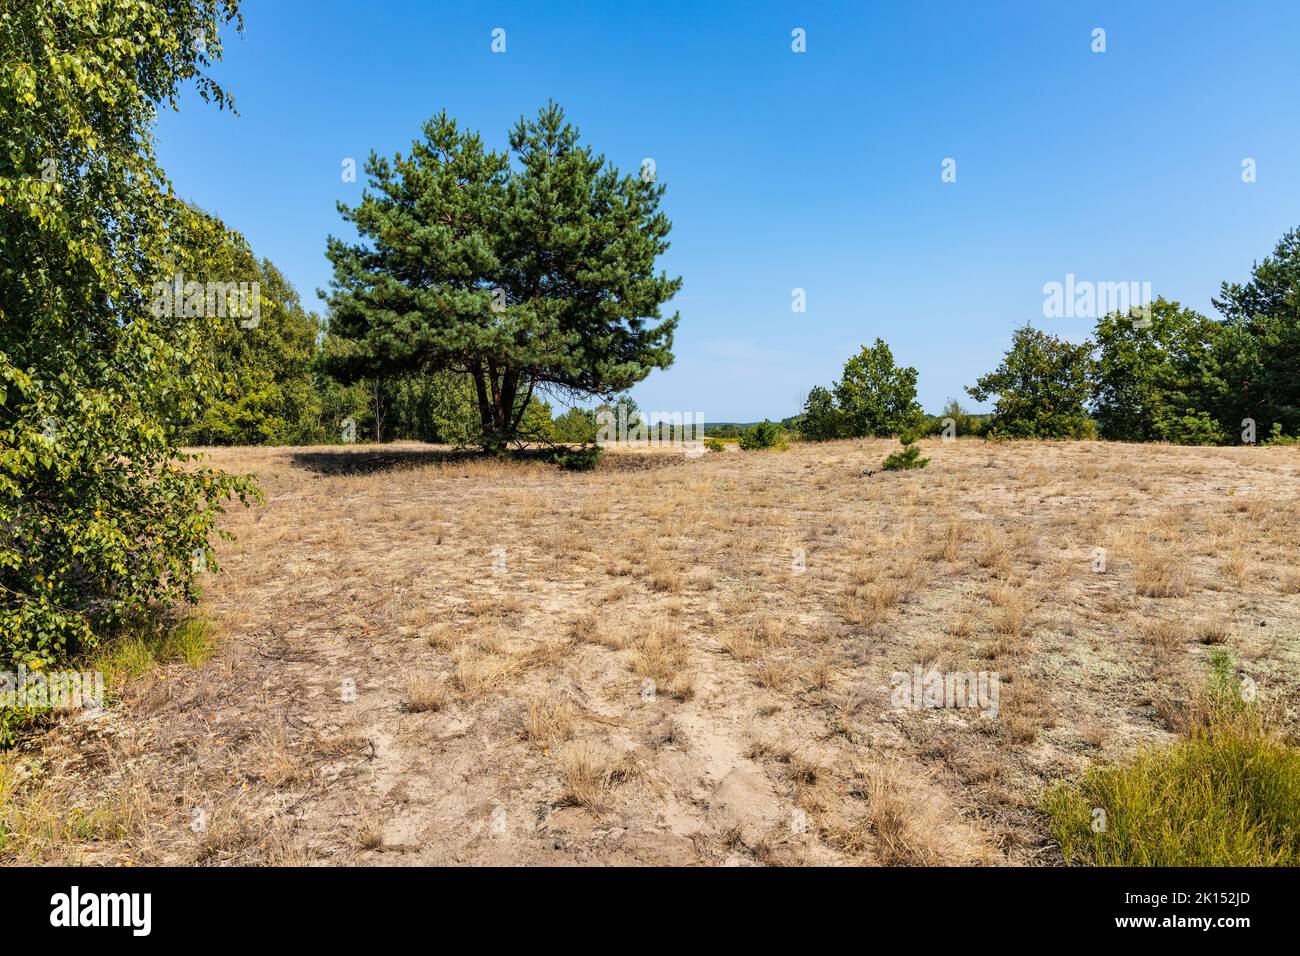 Sand dune Wydma Pekatka with scarce vegetation overlooking Bagno Calowanie Swamp wildlife reserve in Podblel village south of Warsaw in Mazovia region Stock Photo